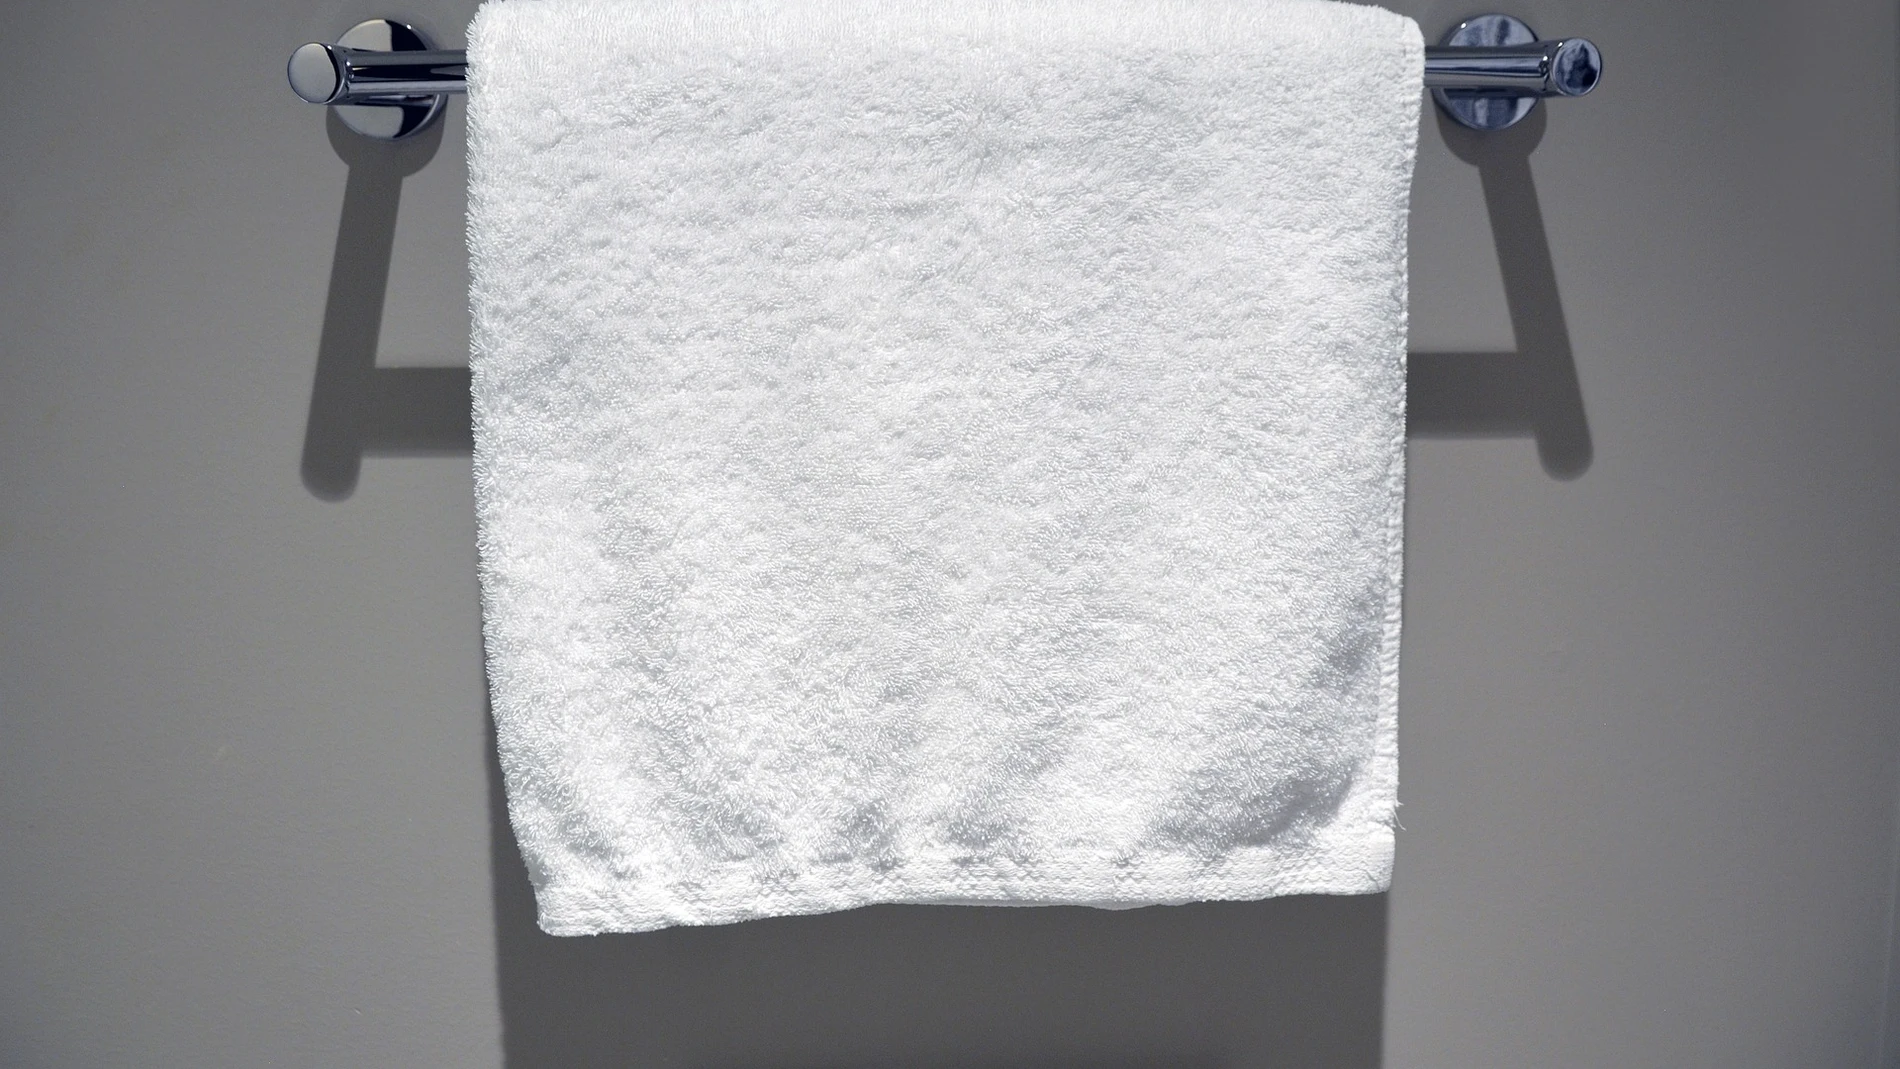 Украли полотенце. Полотенце висит. Полотенце махровое белый. Белое полотенце висит. Полотенца для ванны висячие.